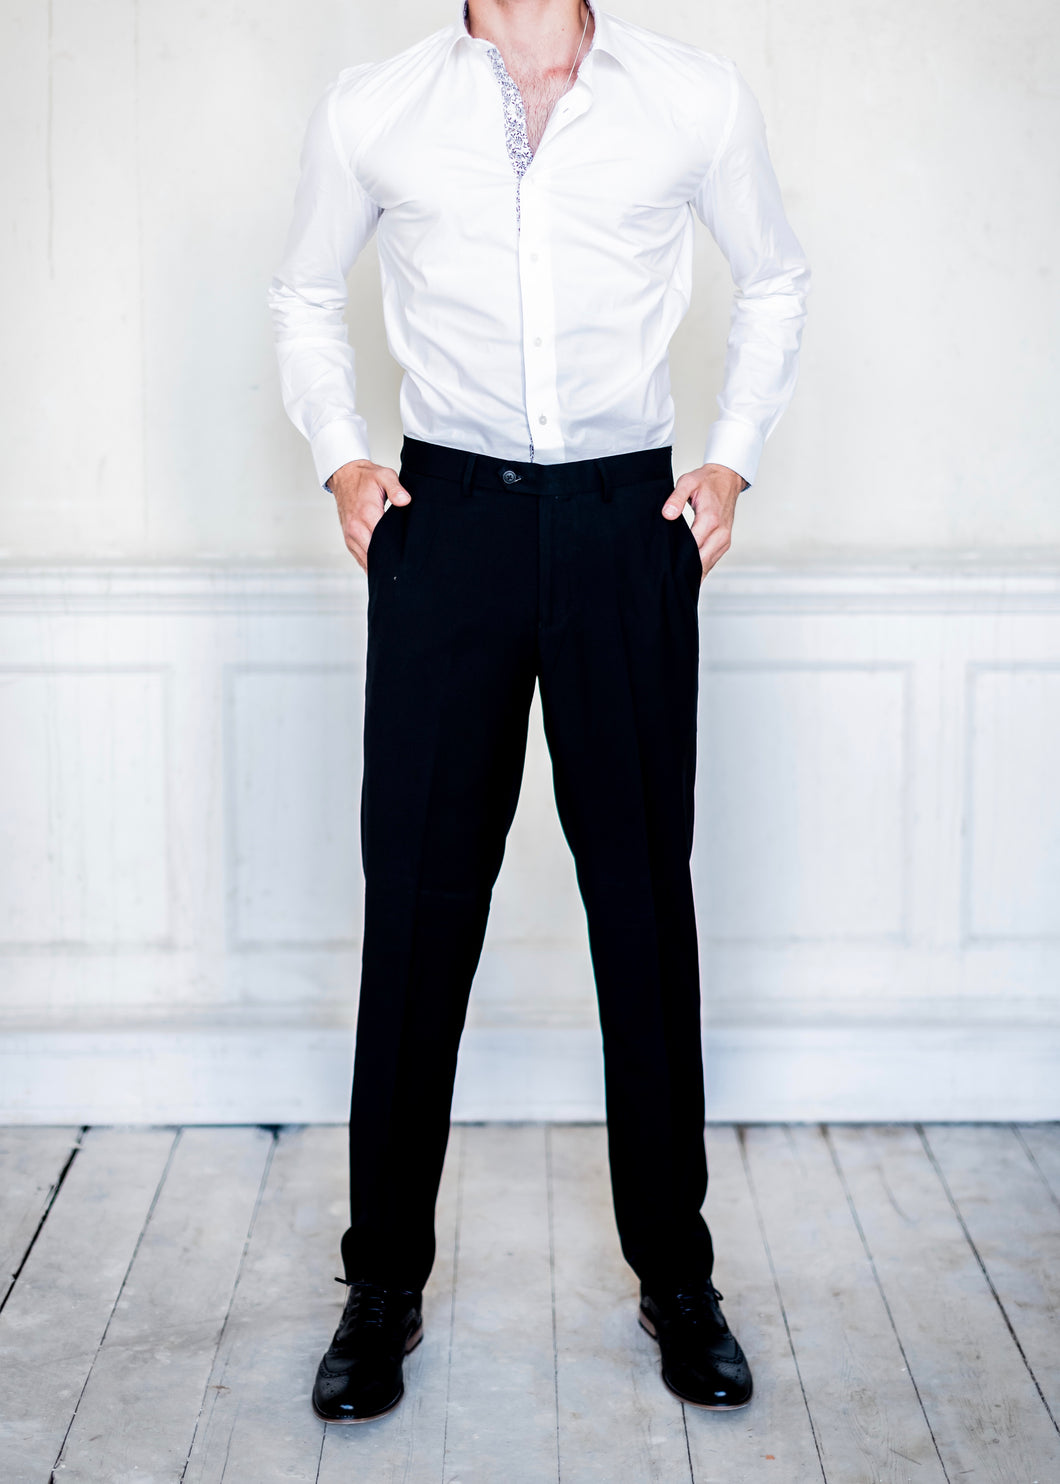 Cavani Marco Black Trousers worn with a crisp white shirt